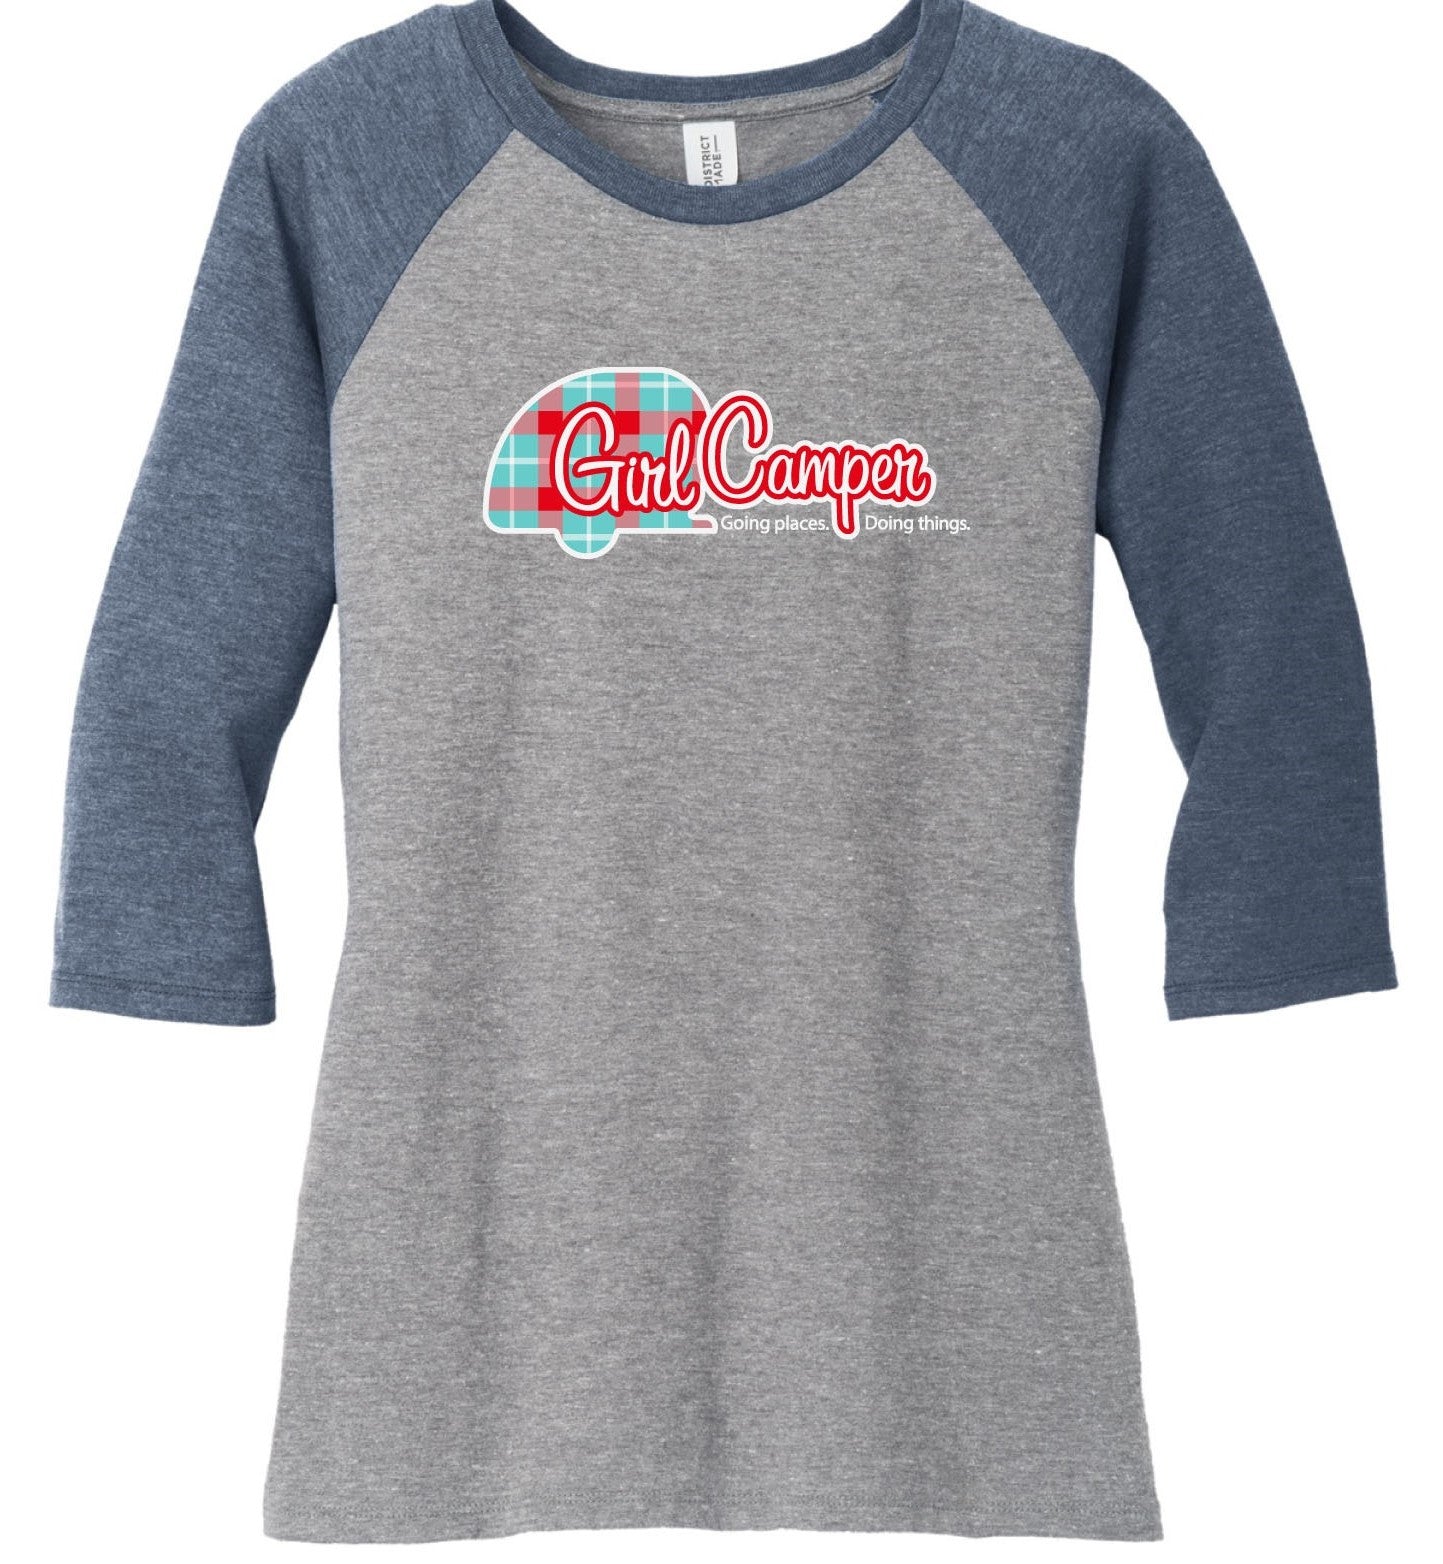 Women's Baseball 3/4 Sleeve Girl Camper T-Shirt Navy